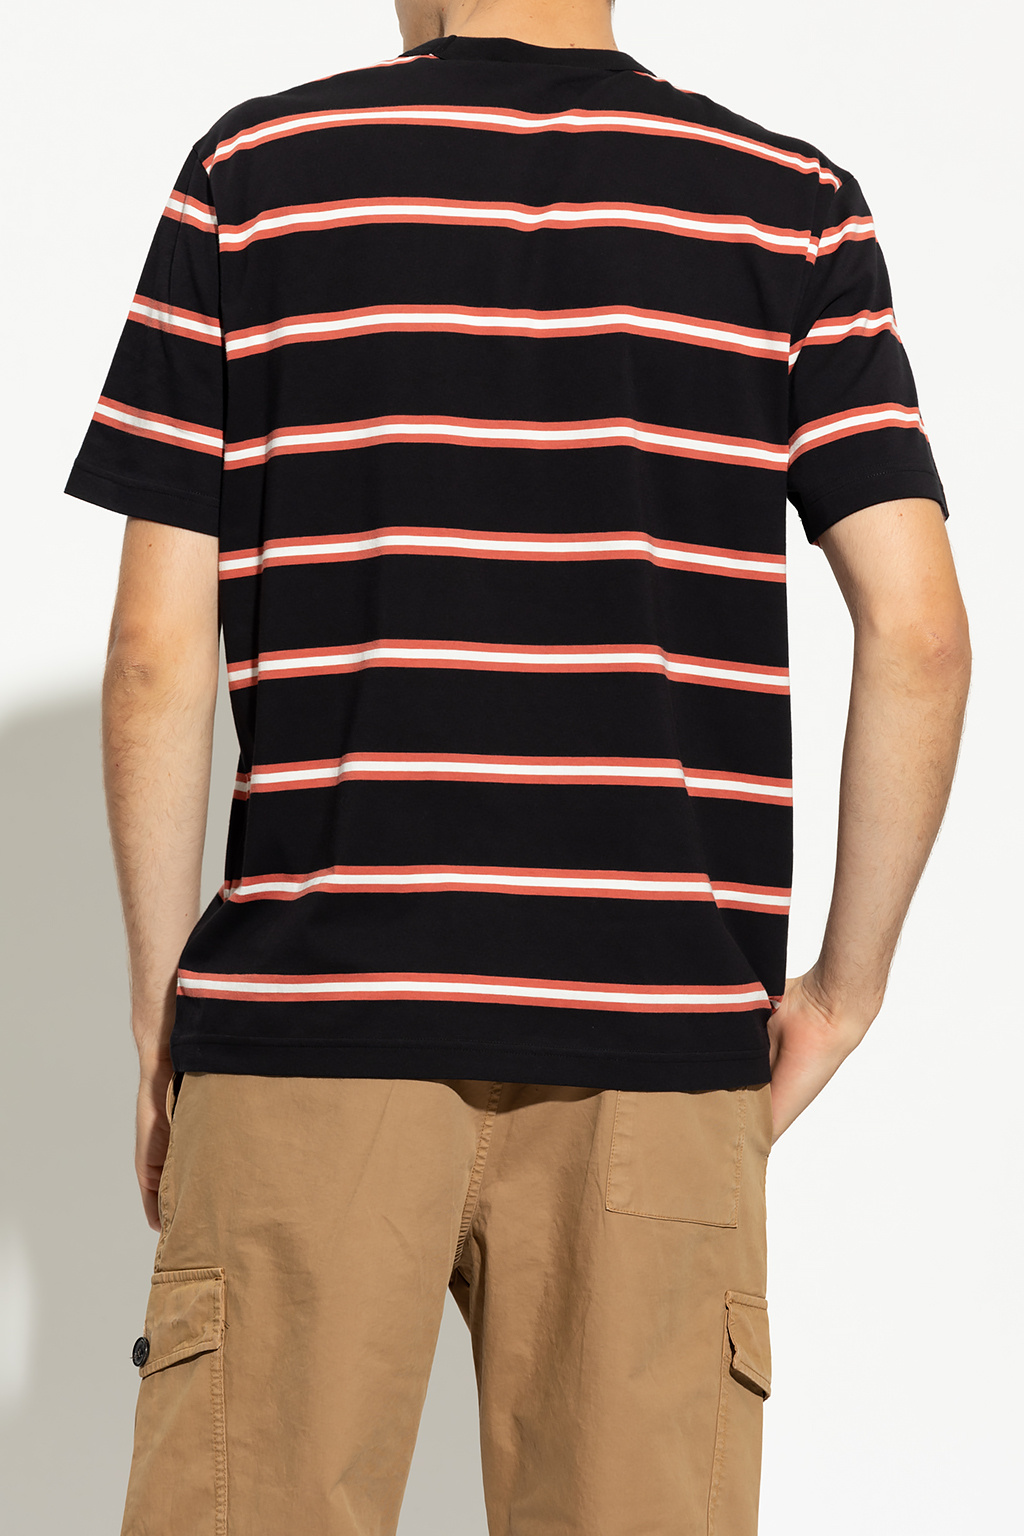 dolce & gabbana black printed shirt Striped T-shirt